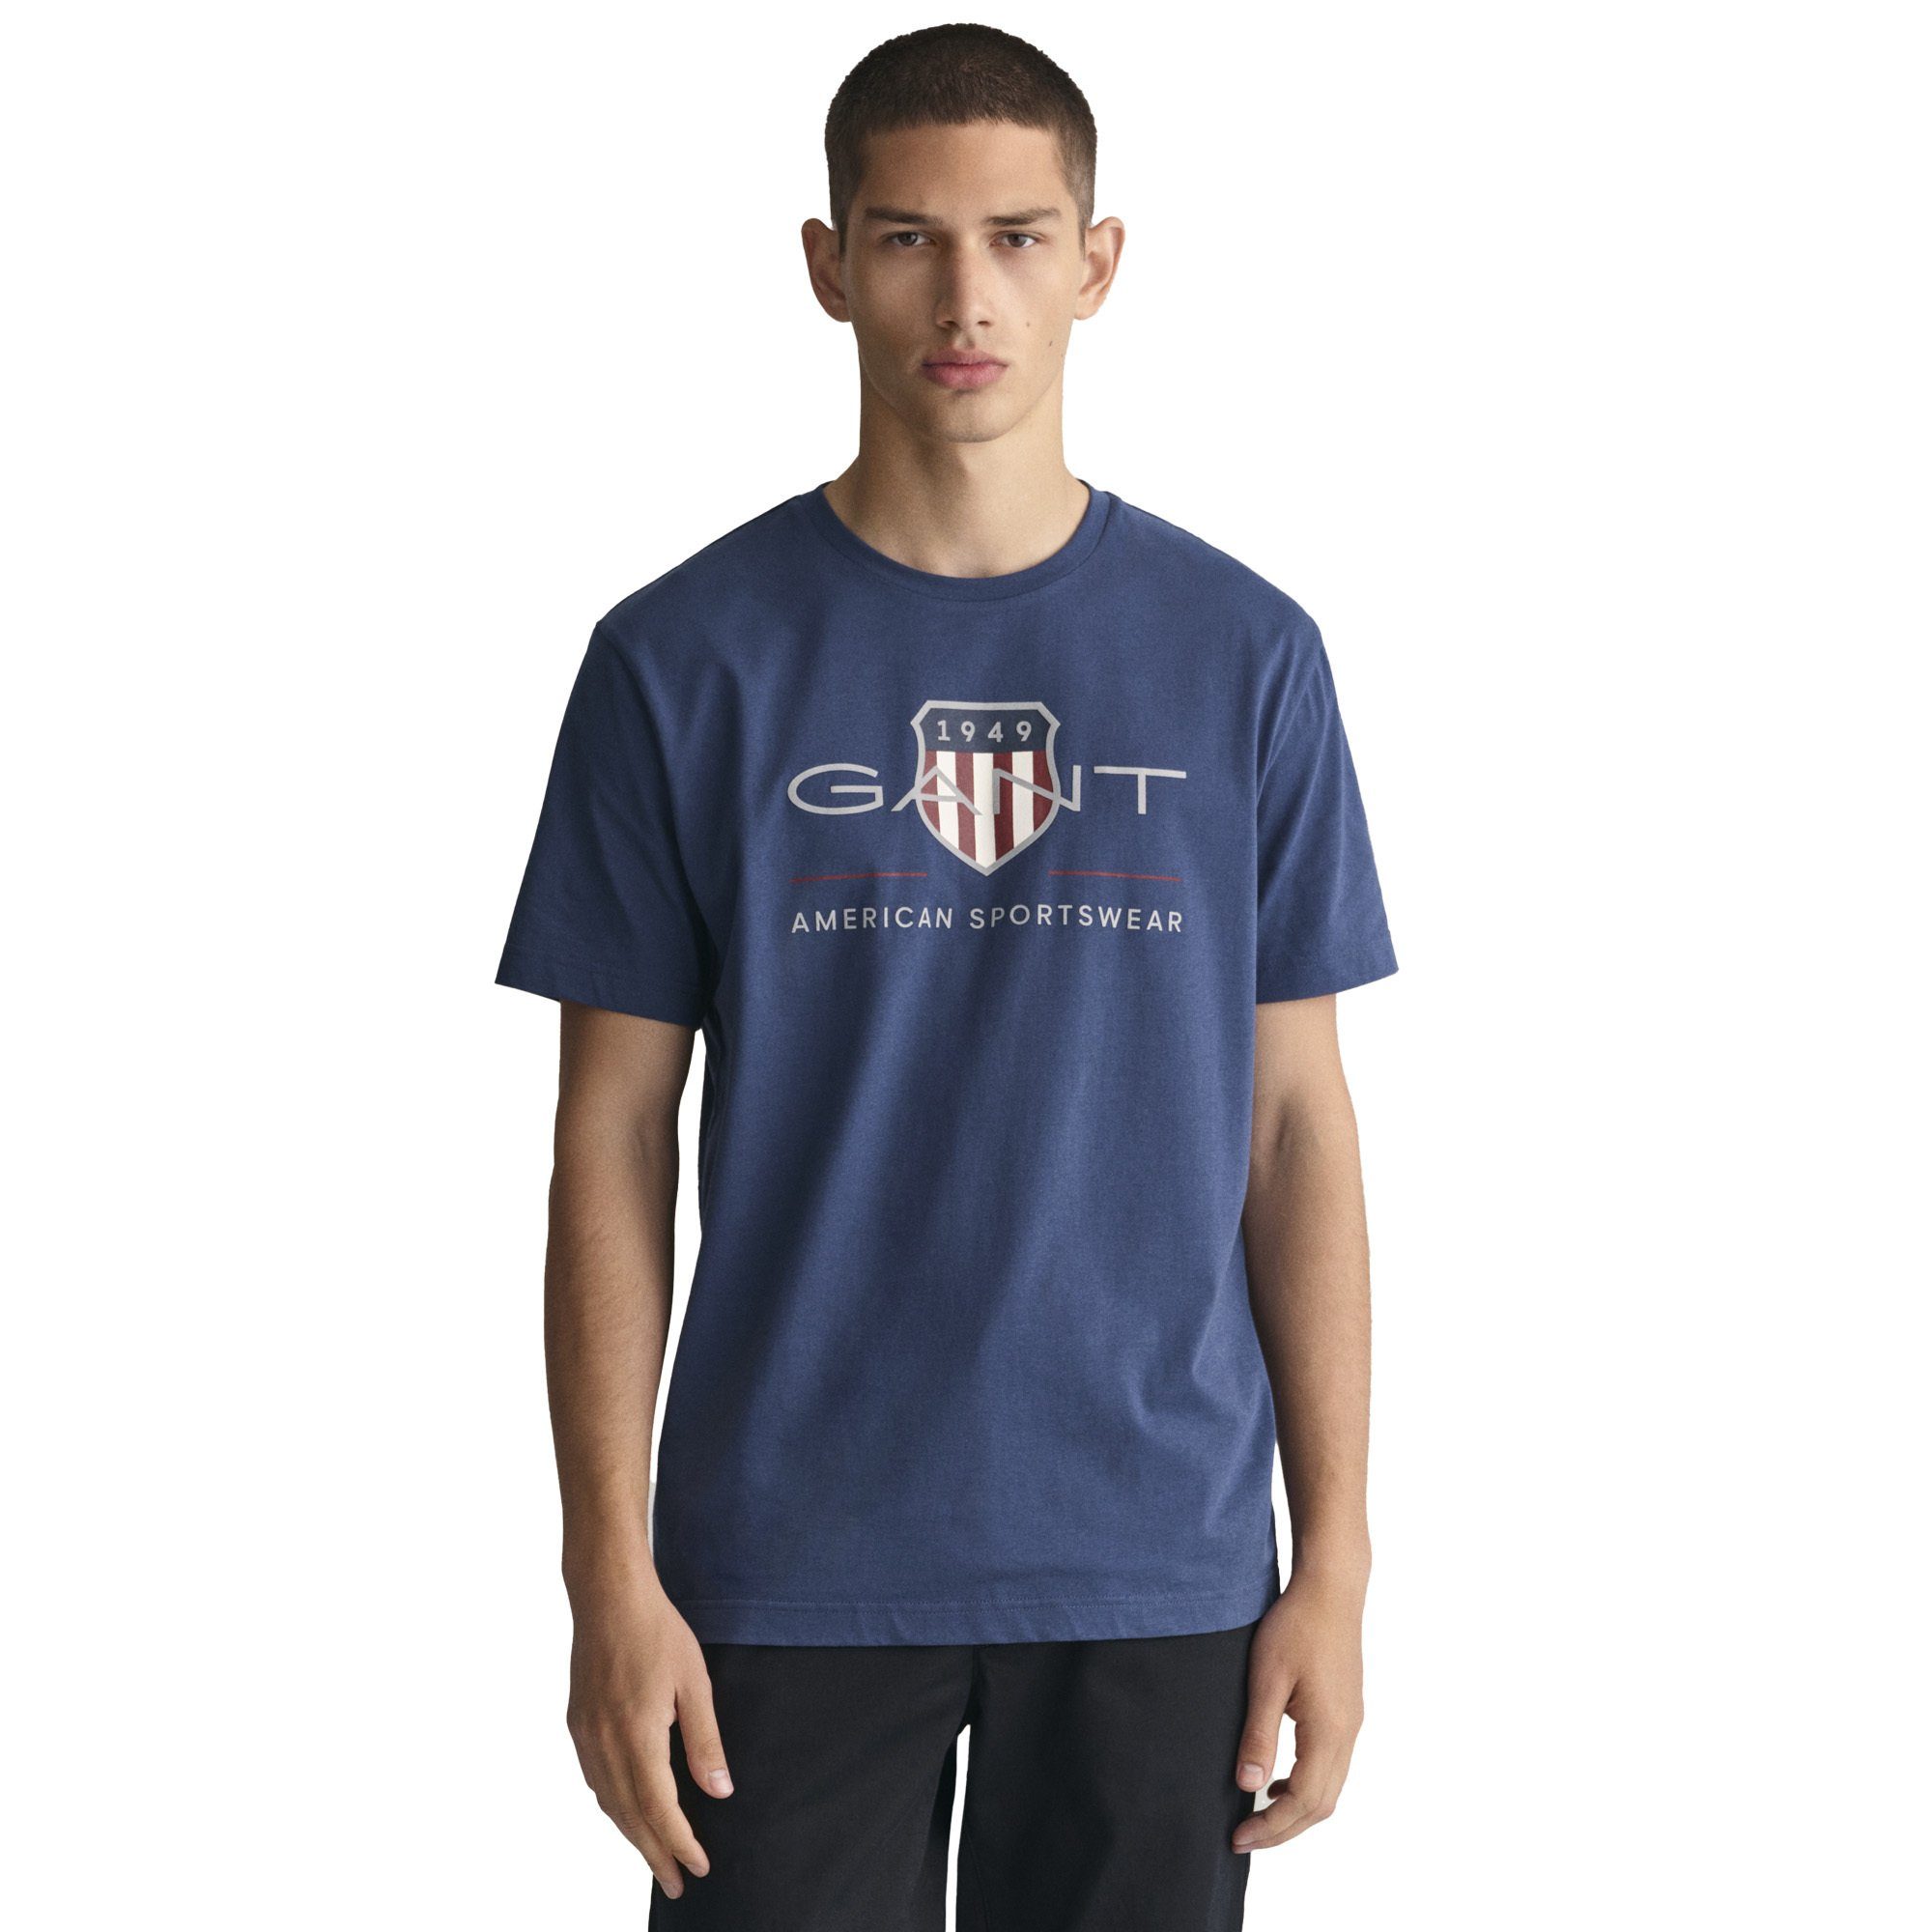 Gant T-Shirt Blue REGULAR SHIELD, (Dusty Blau ARCHIVE Rundhals Herren T-Shirt Sea) -